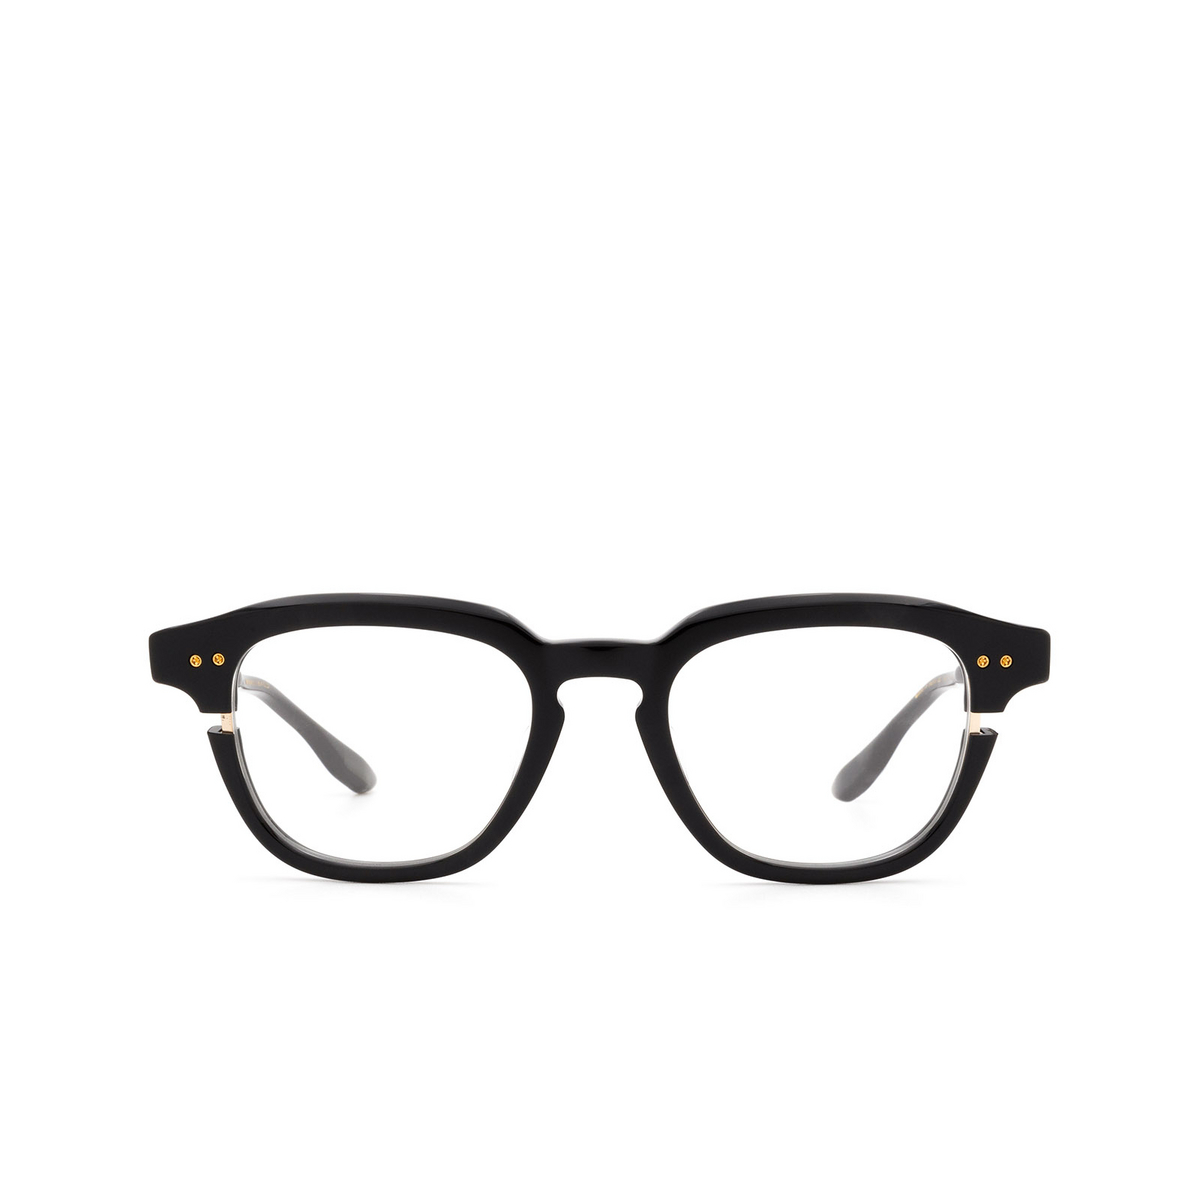 Dita LINEUS Eyeglasses BLK-GLD Black & White Gold - front view